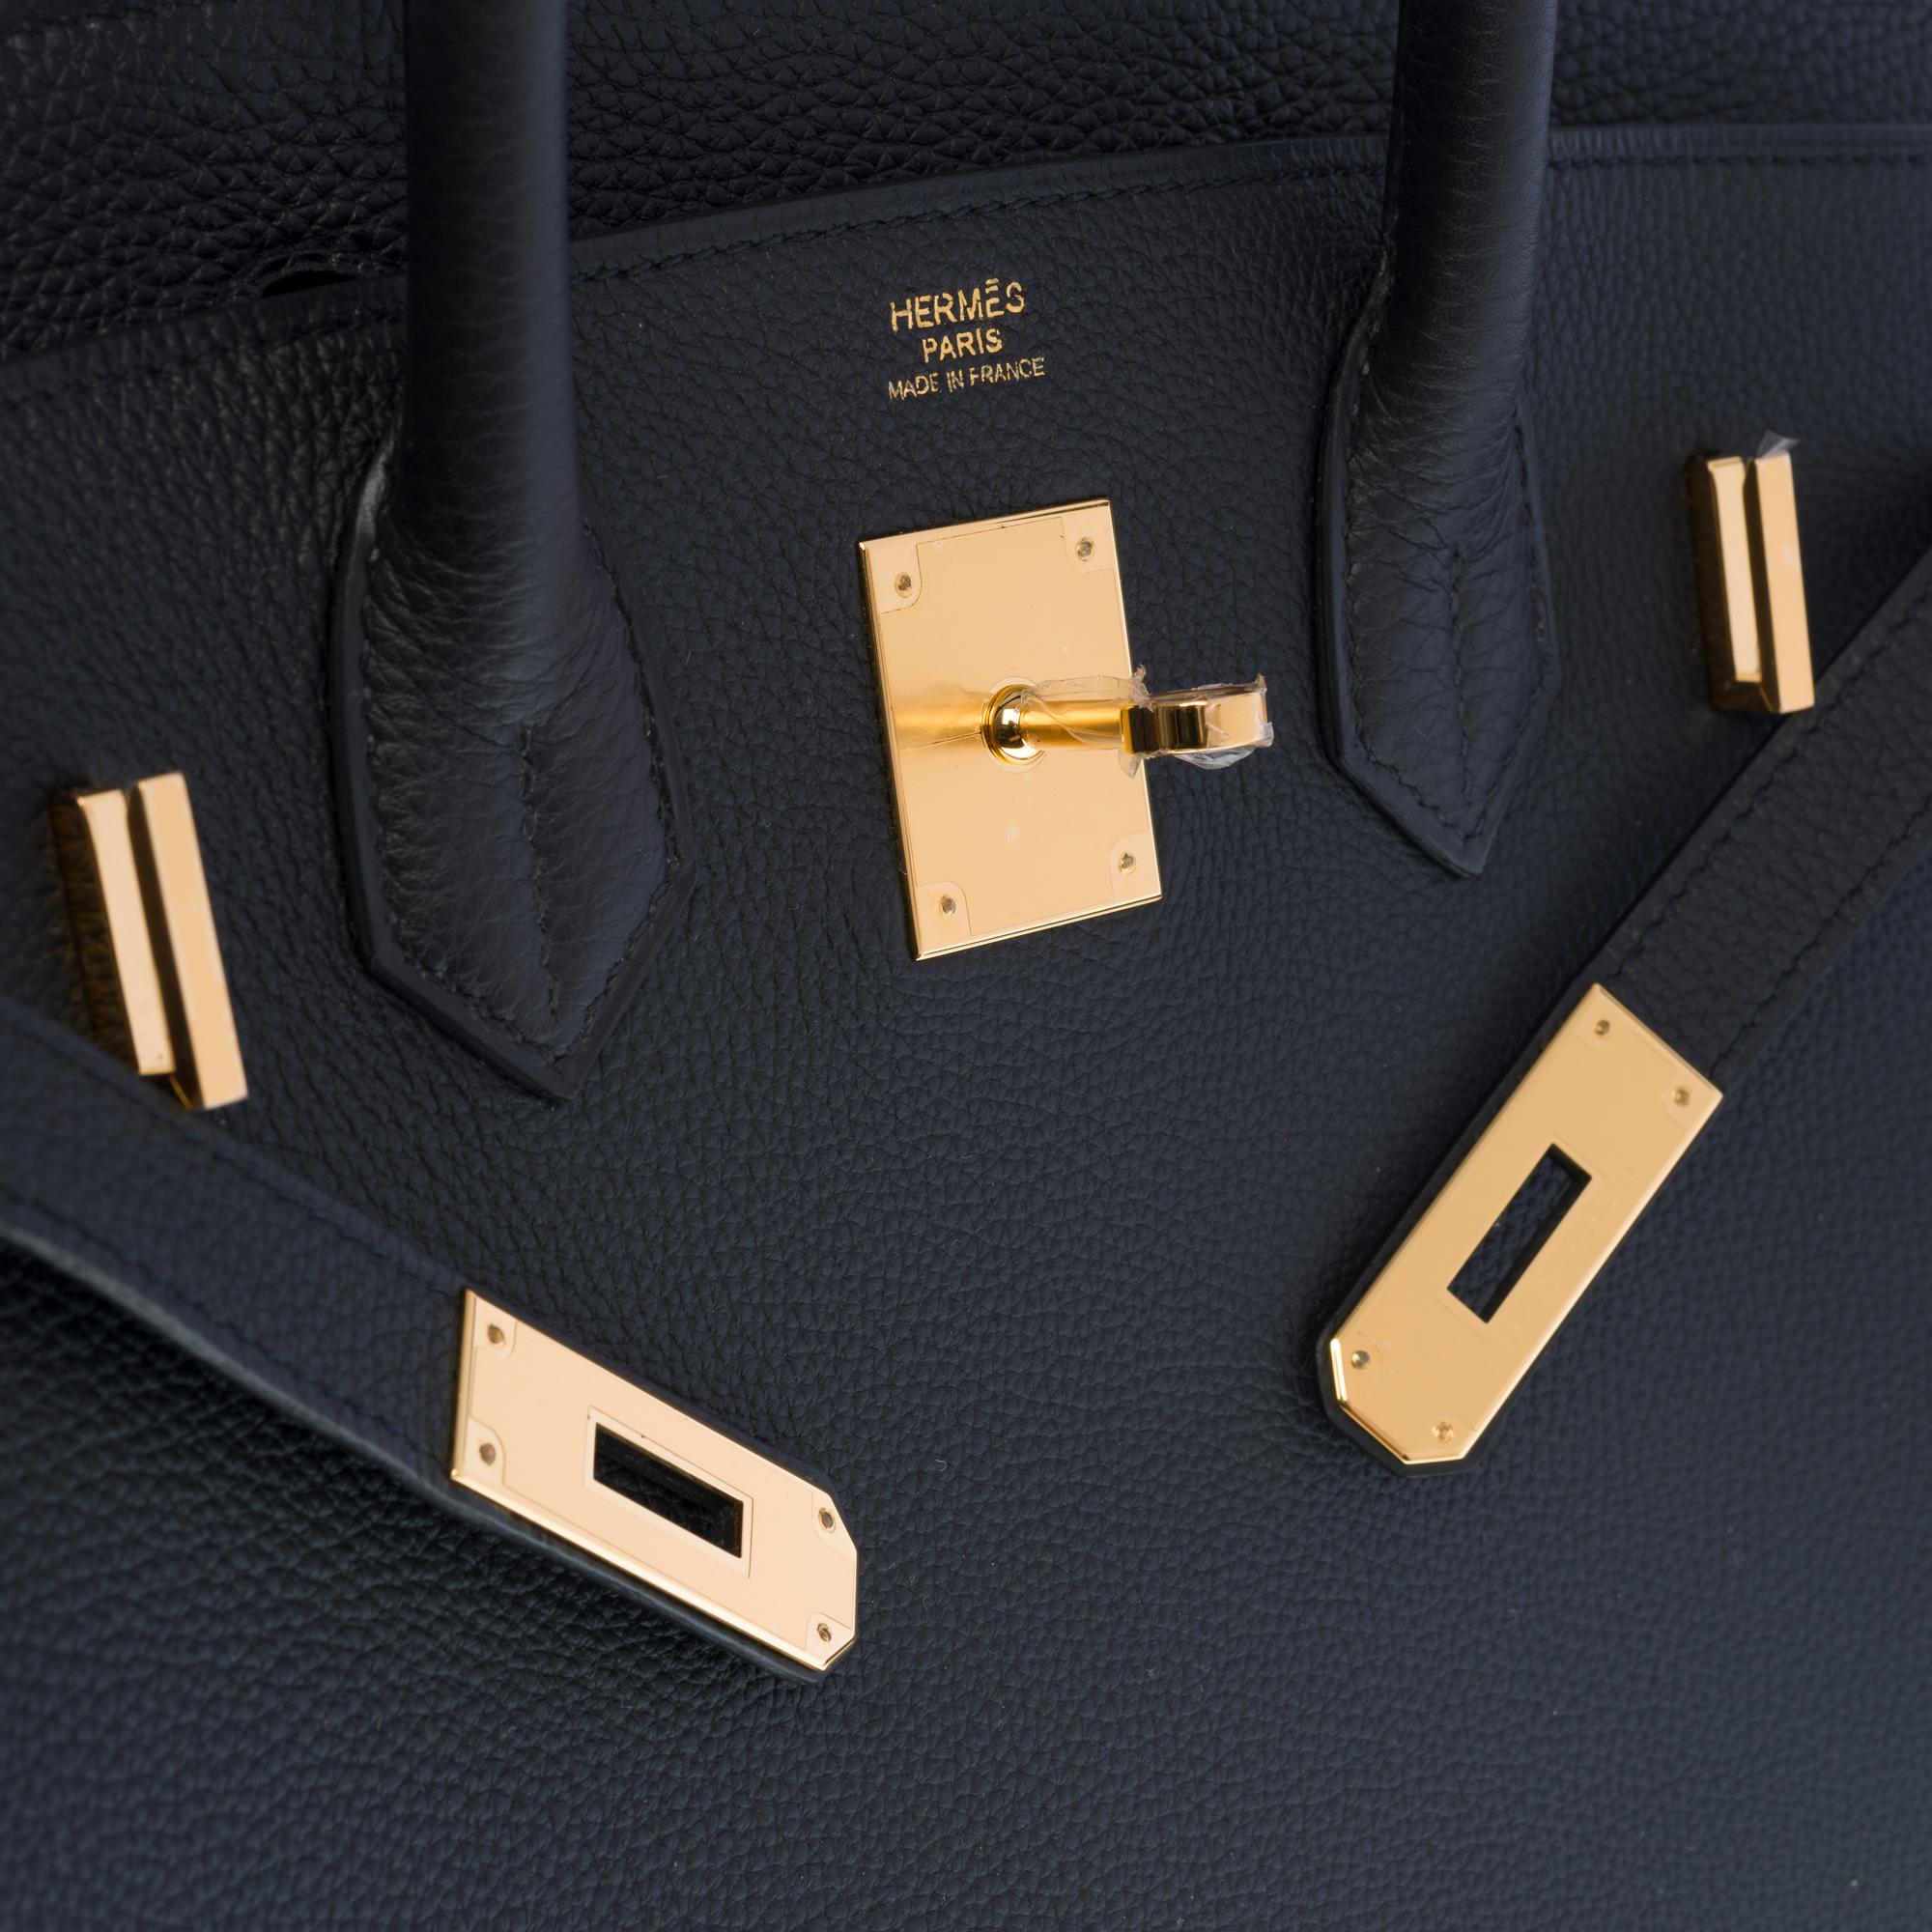 Orange Brand New - Hermès Birkin 30 handbag in Black Togo leather, gold hardware